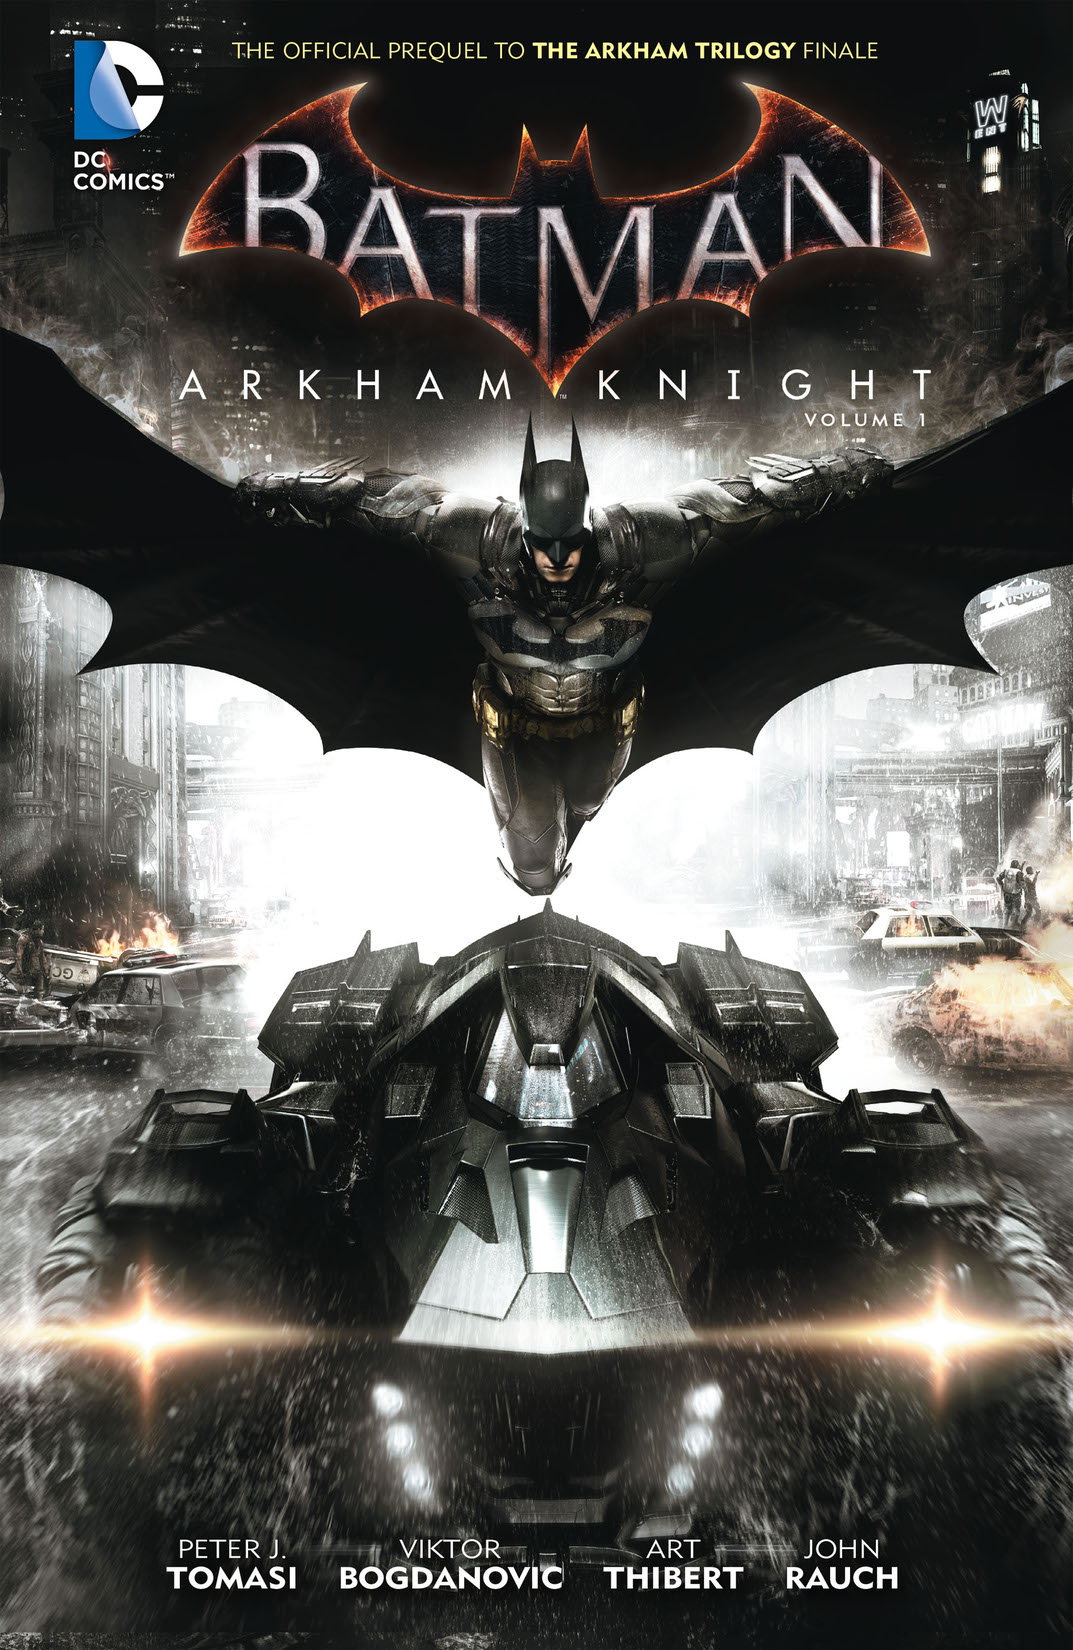 Batman: Arkham Knight Vol. 1 preview images